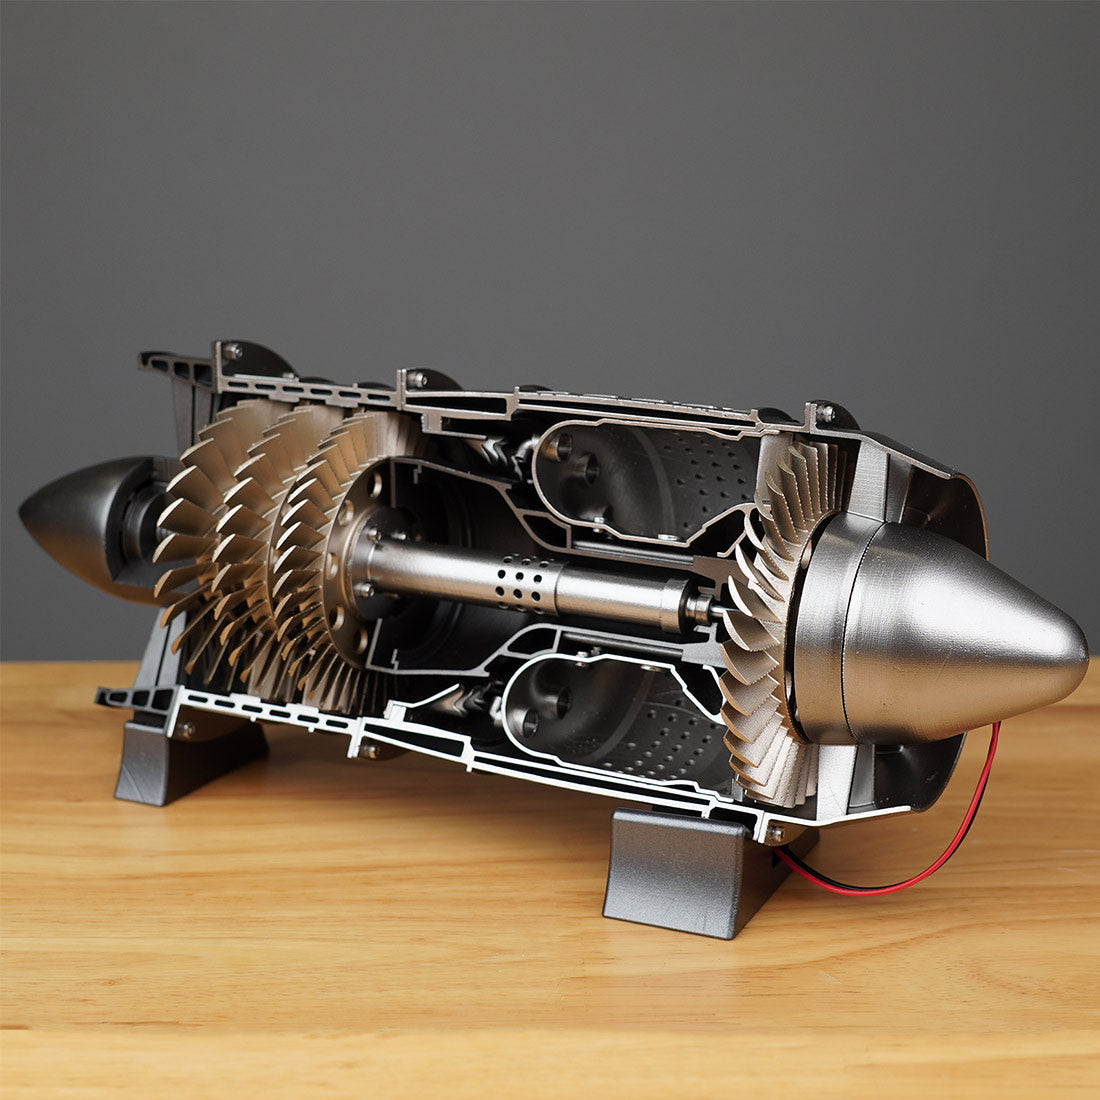 3D Printed Turbojet Engine Model Mechanical Science Desktop Ornament WP-85 (100PCS)